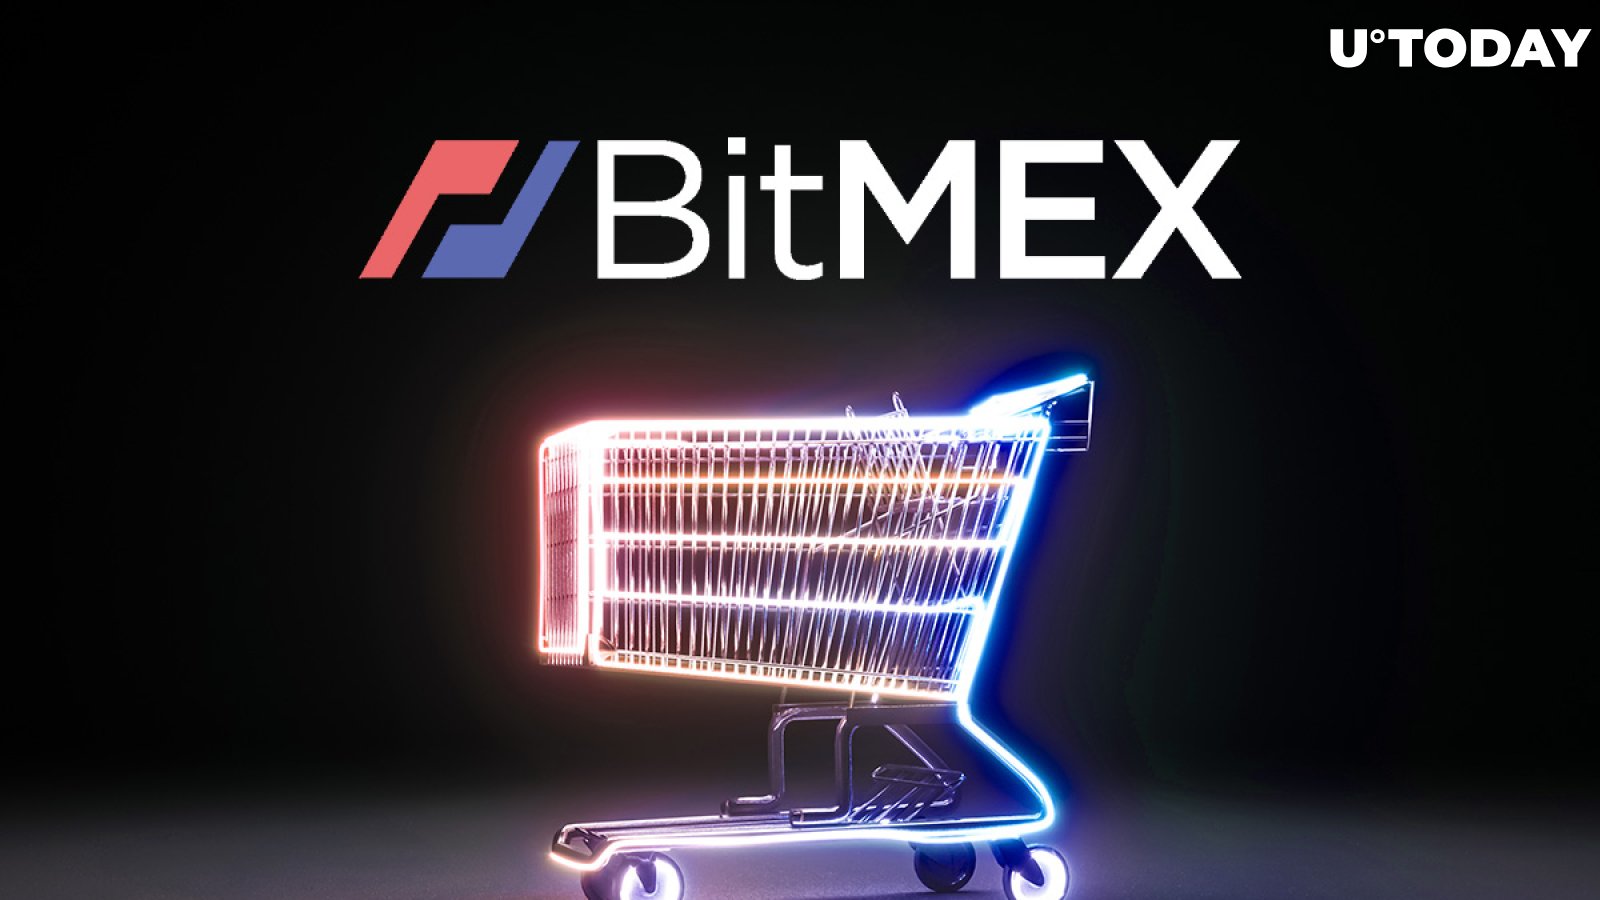 BitMEX Saw $100 Mln + Buy Liquidations on XBT/USD as BTC Surpassed $10,000: Skew Data